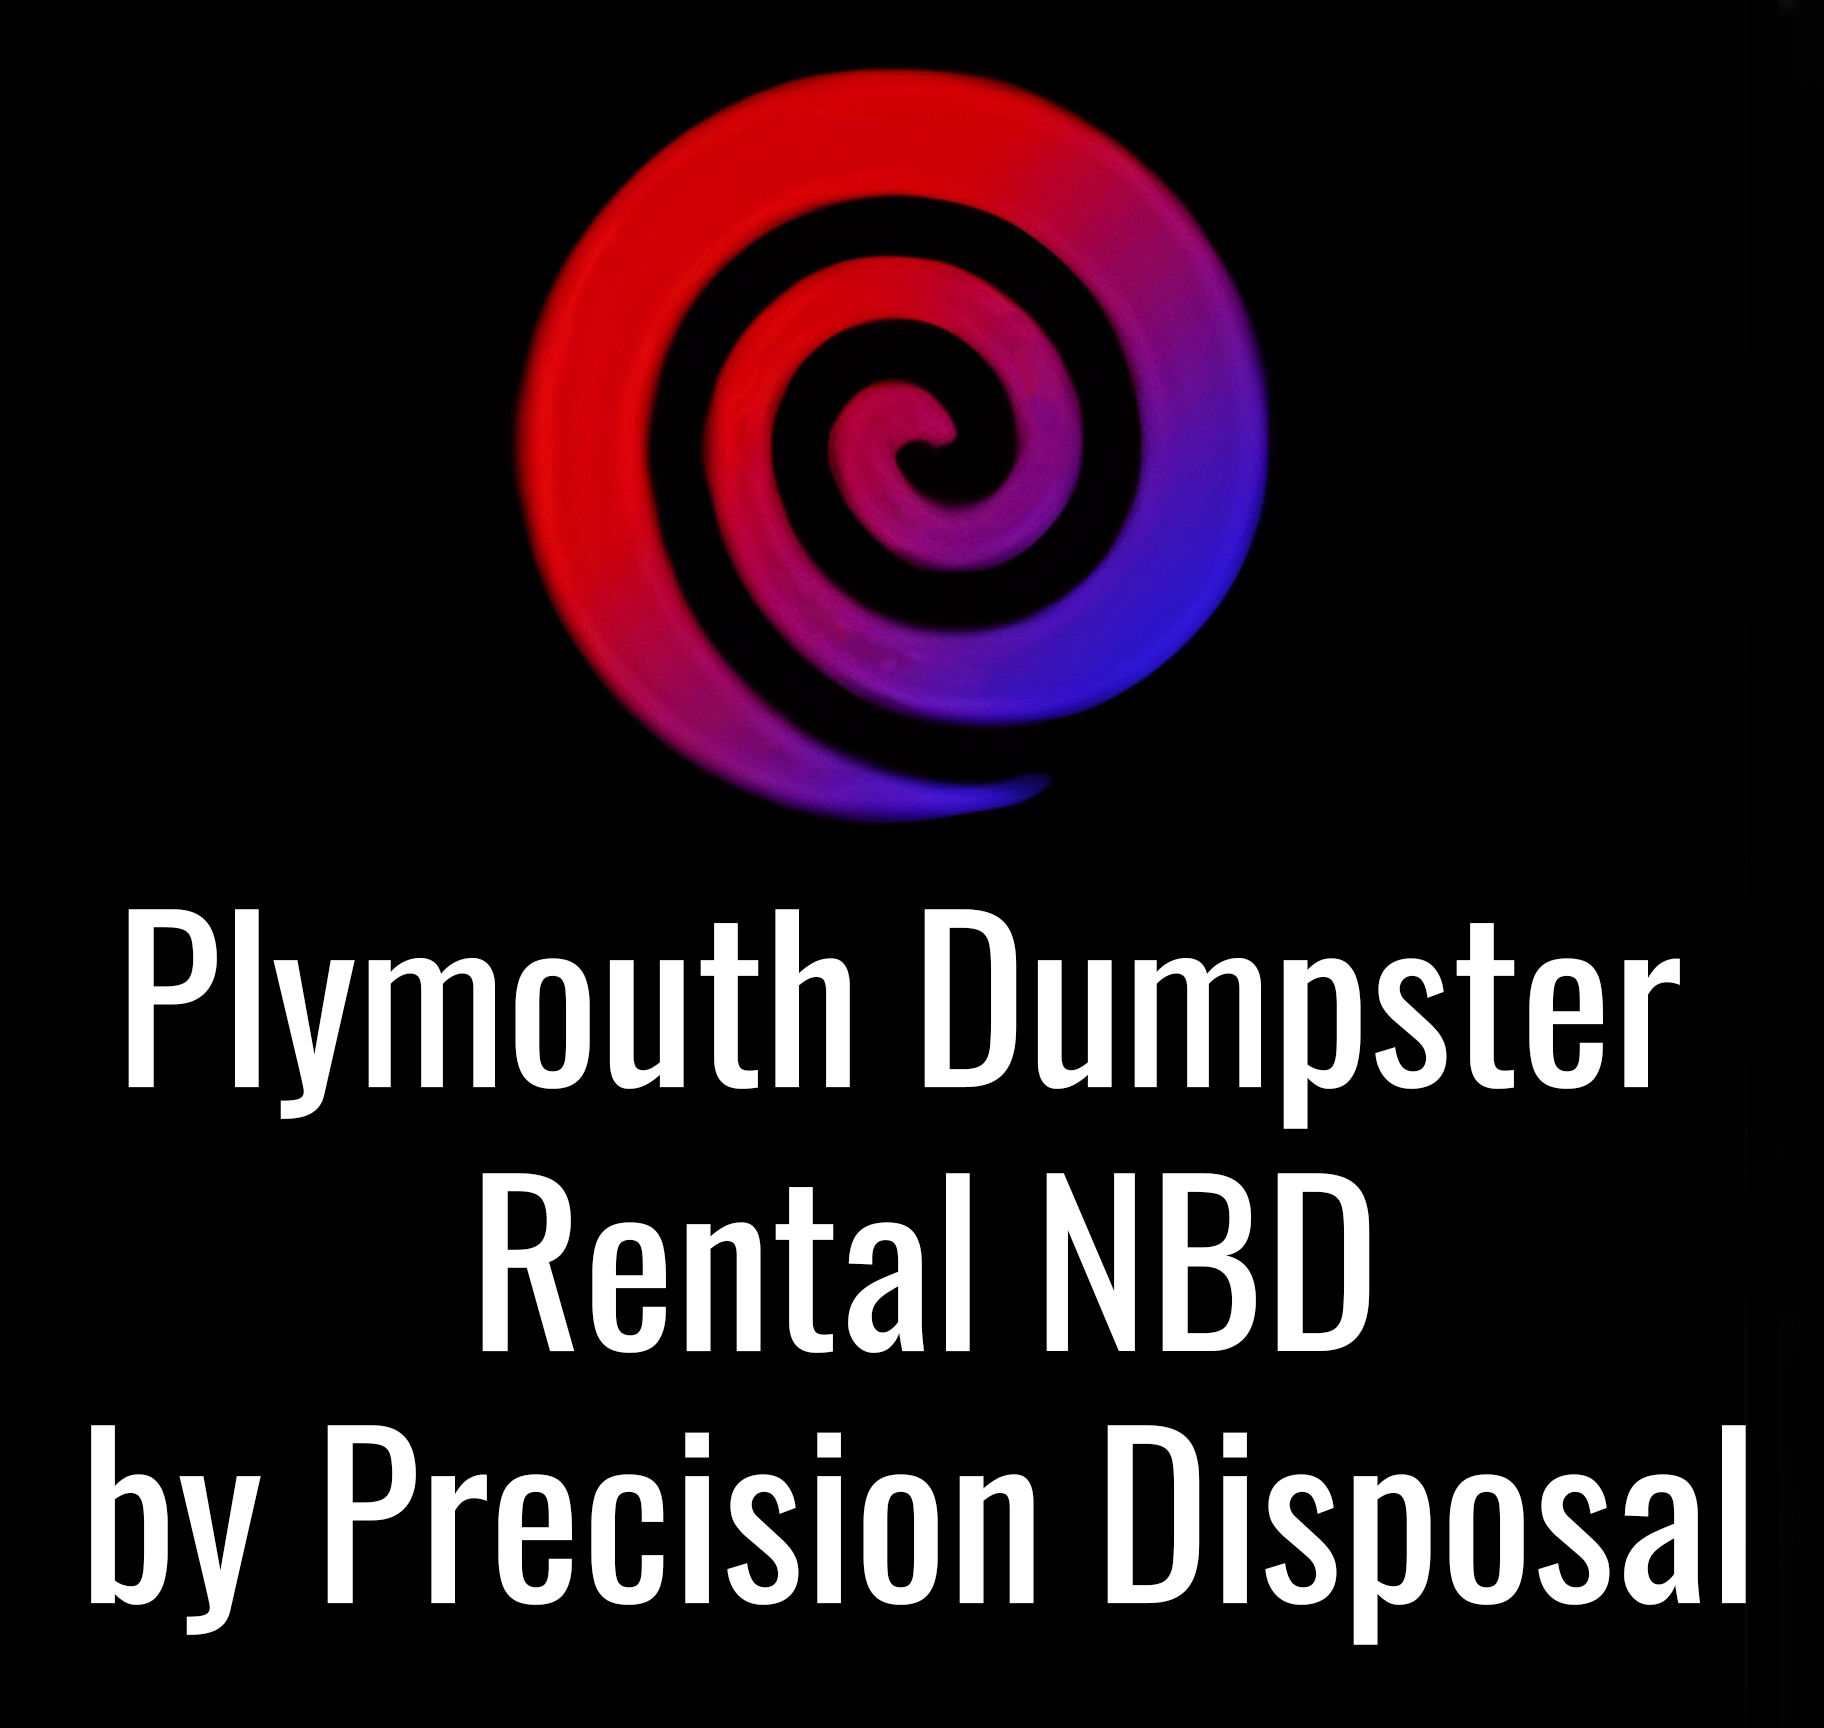 Plymouth Dumpster Rental NBD by Precision Disposal's Logo